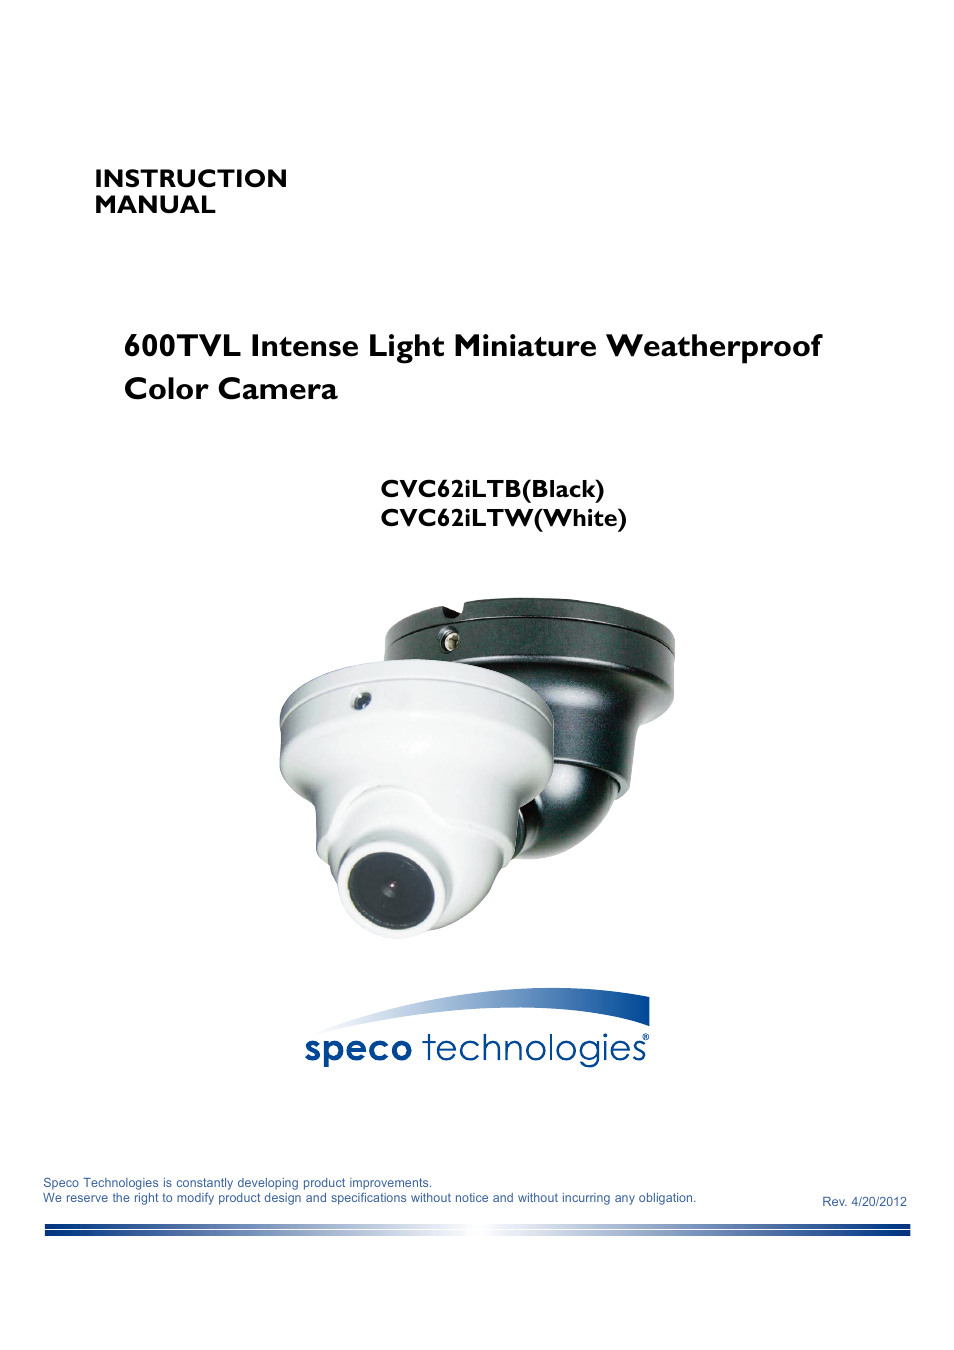 600TVL Intense Light Minature Weatherproof Color Camera CVC62iLTW